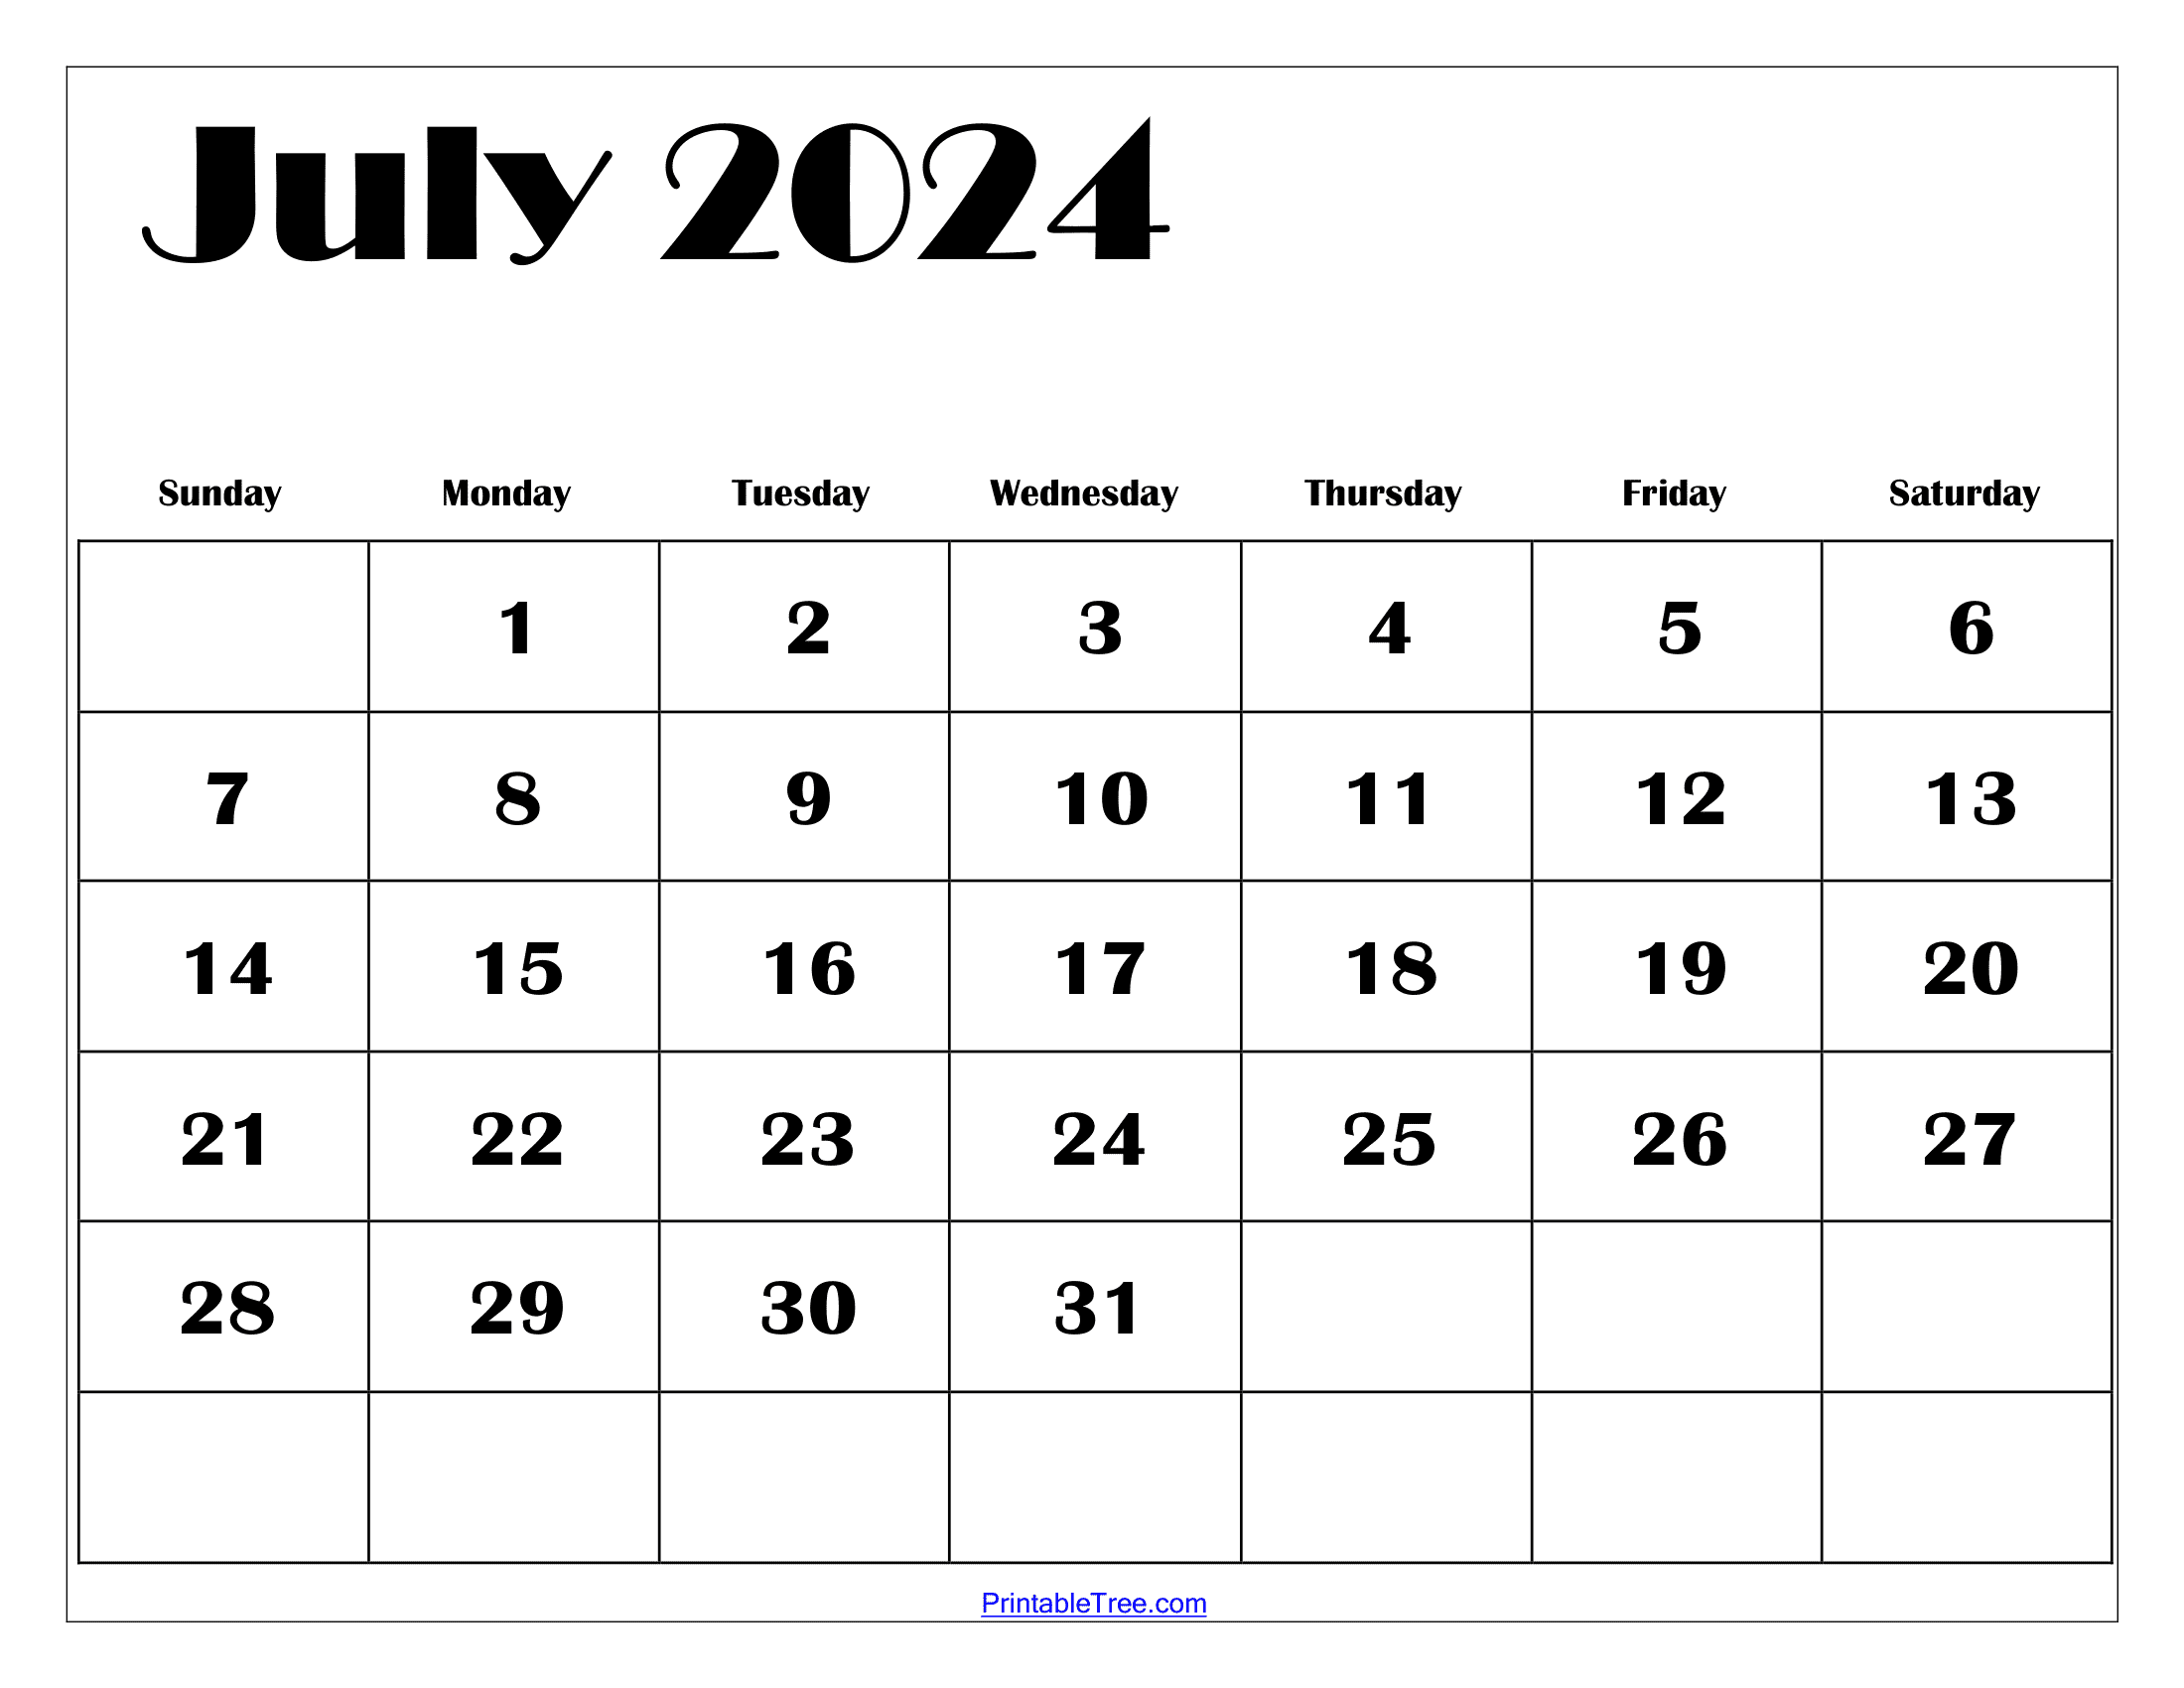 July 2024 Calendar Printable Pdf With Holidays Free Template for June July 2024 Calendar Printable